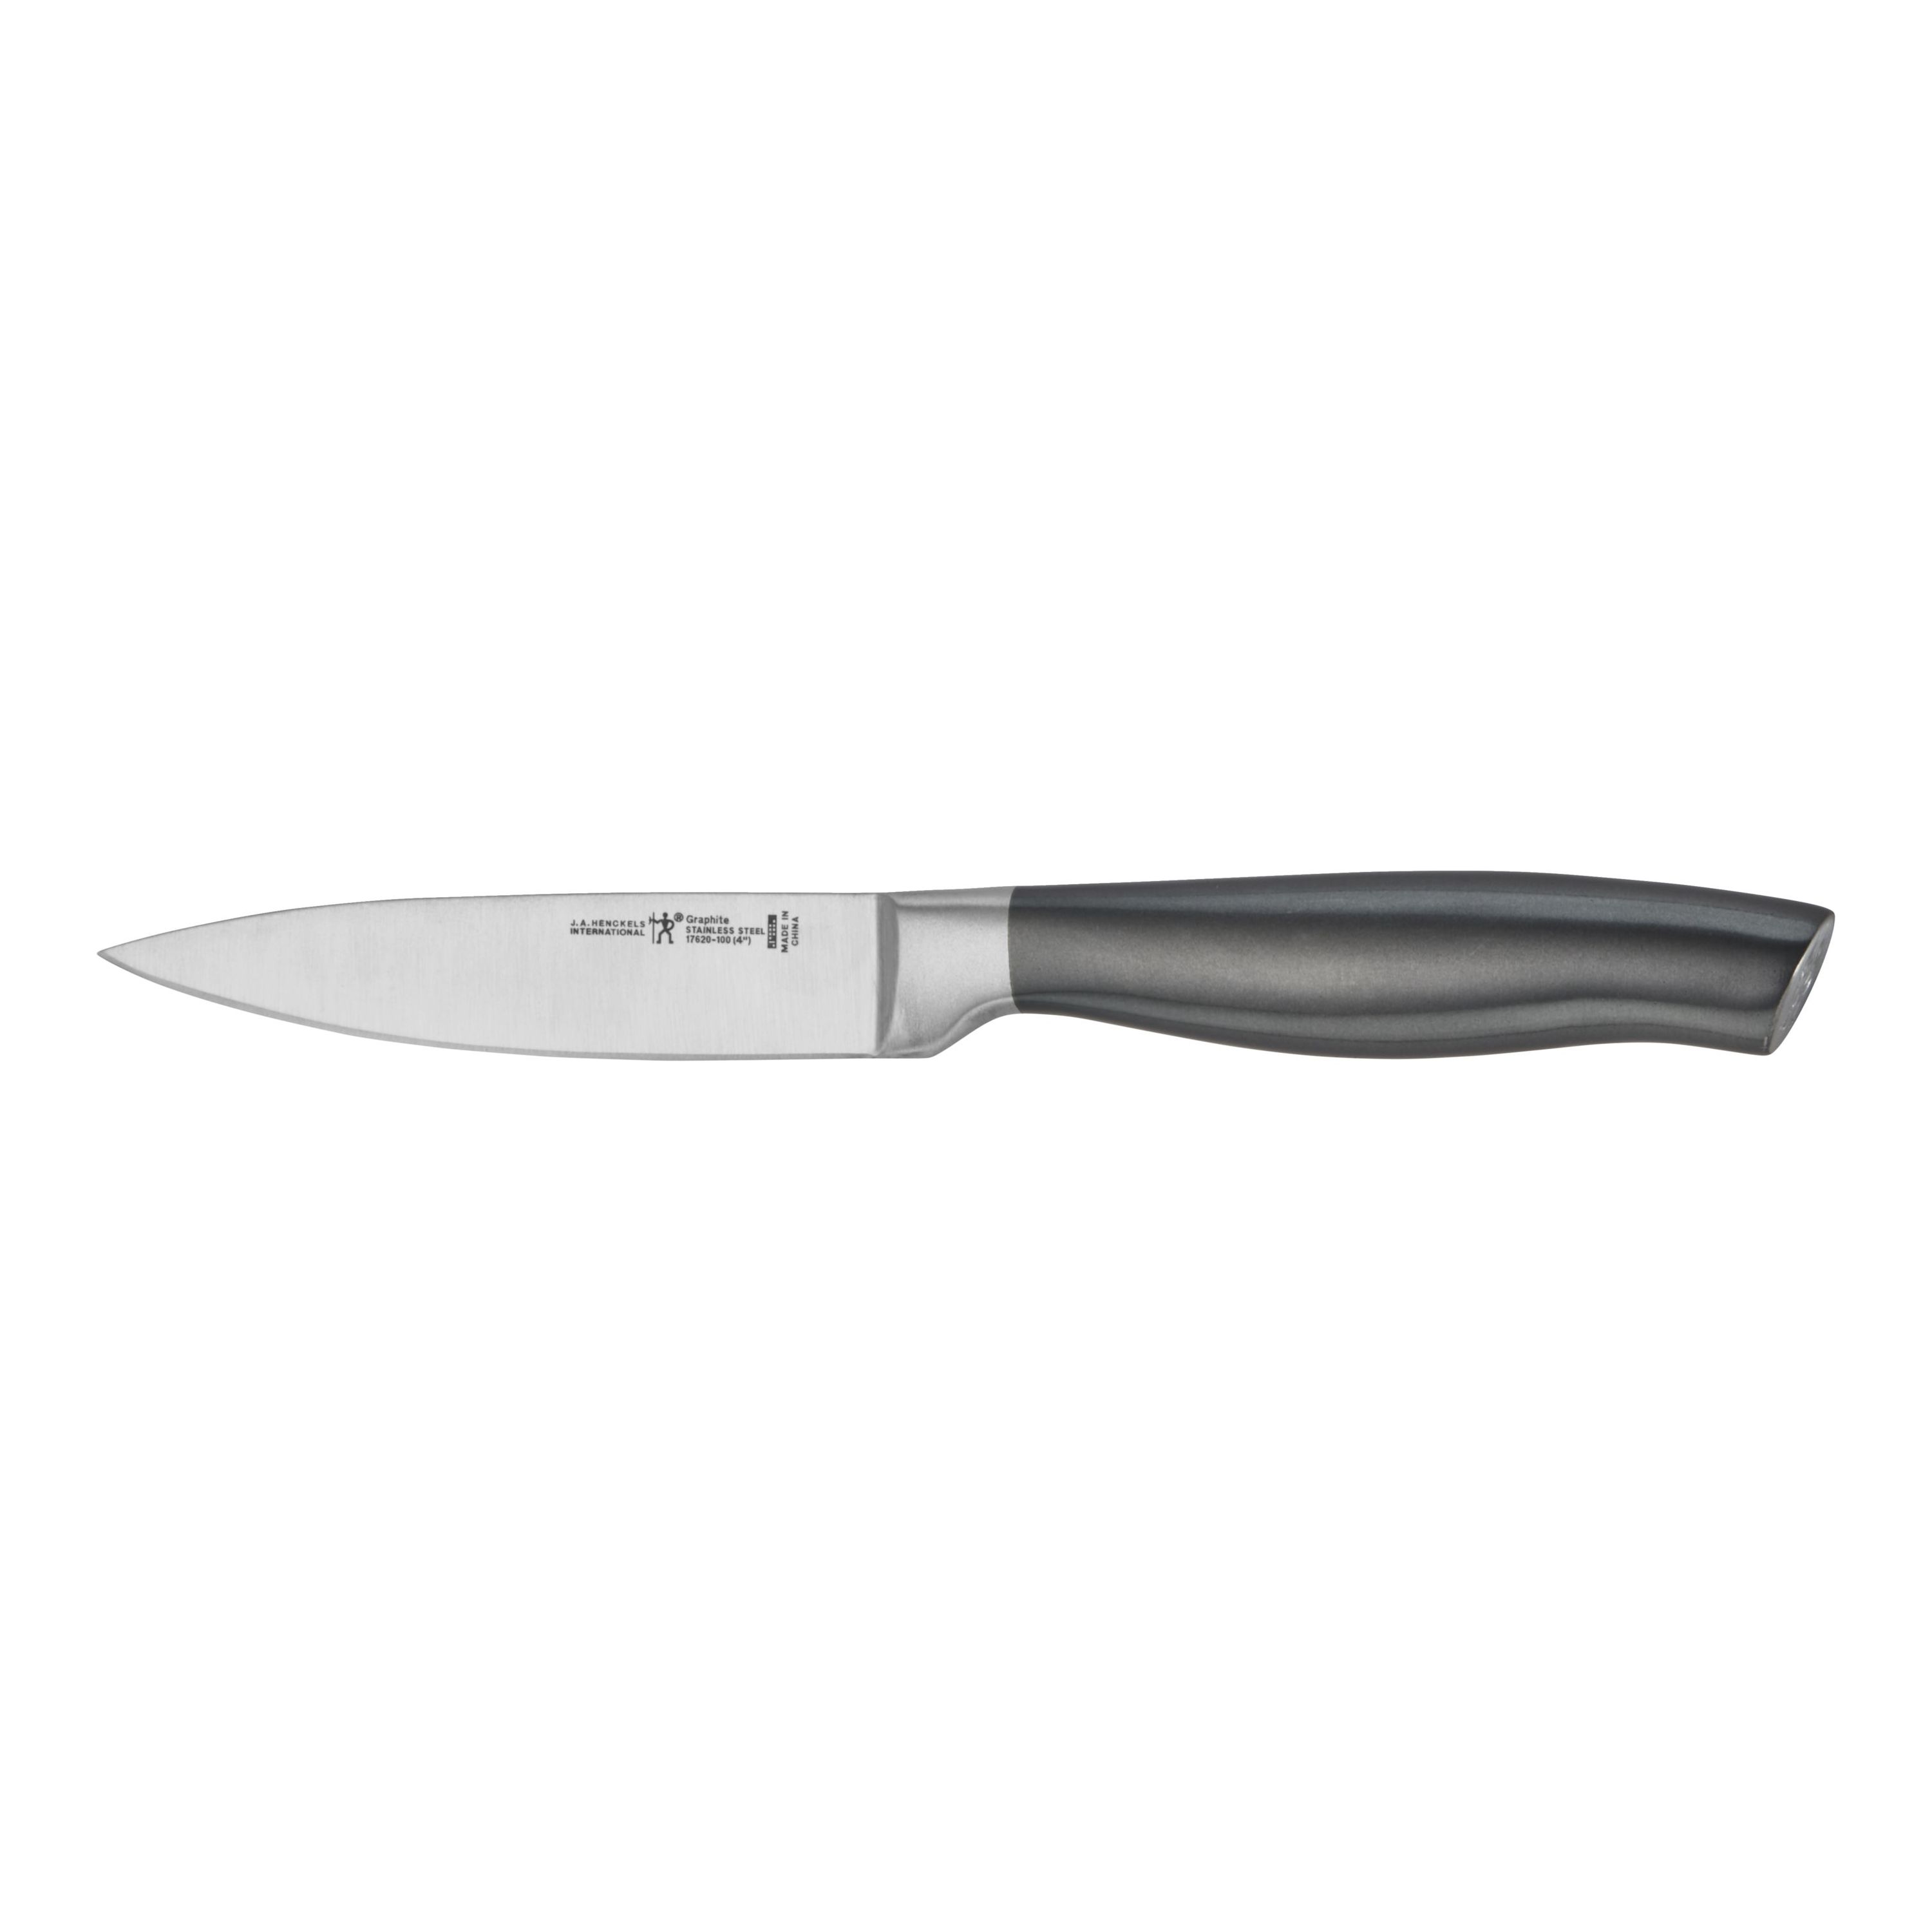 MONGSEW 8 Pcs Paring Knives, 4 Pcs Paring Knife and 4 Pcs Knife Sheath, 4inch Fruit and Vegetable Knife, Stylish Paring Knife Set, German Stainless